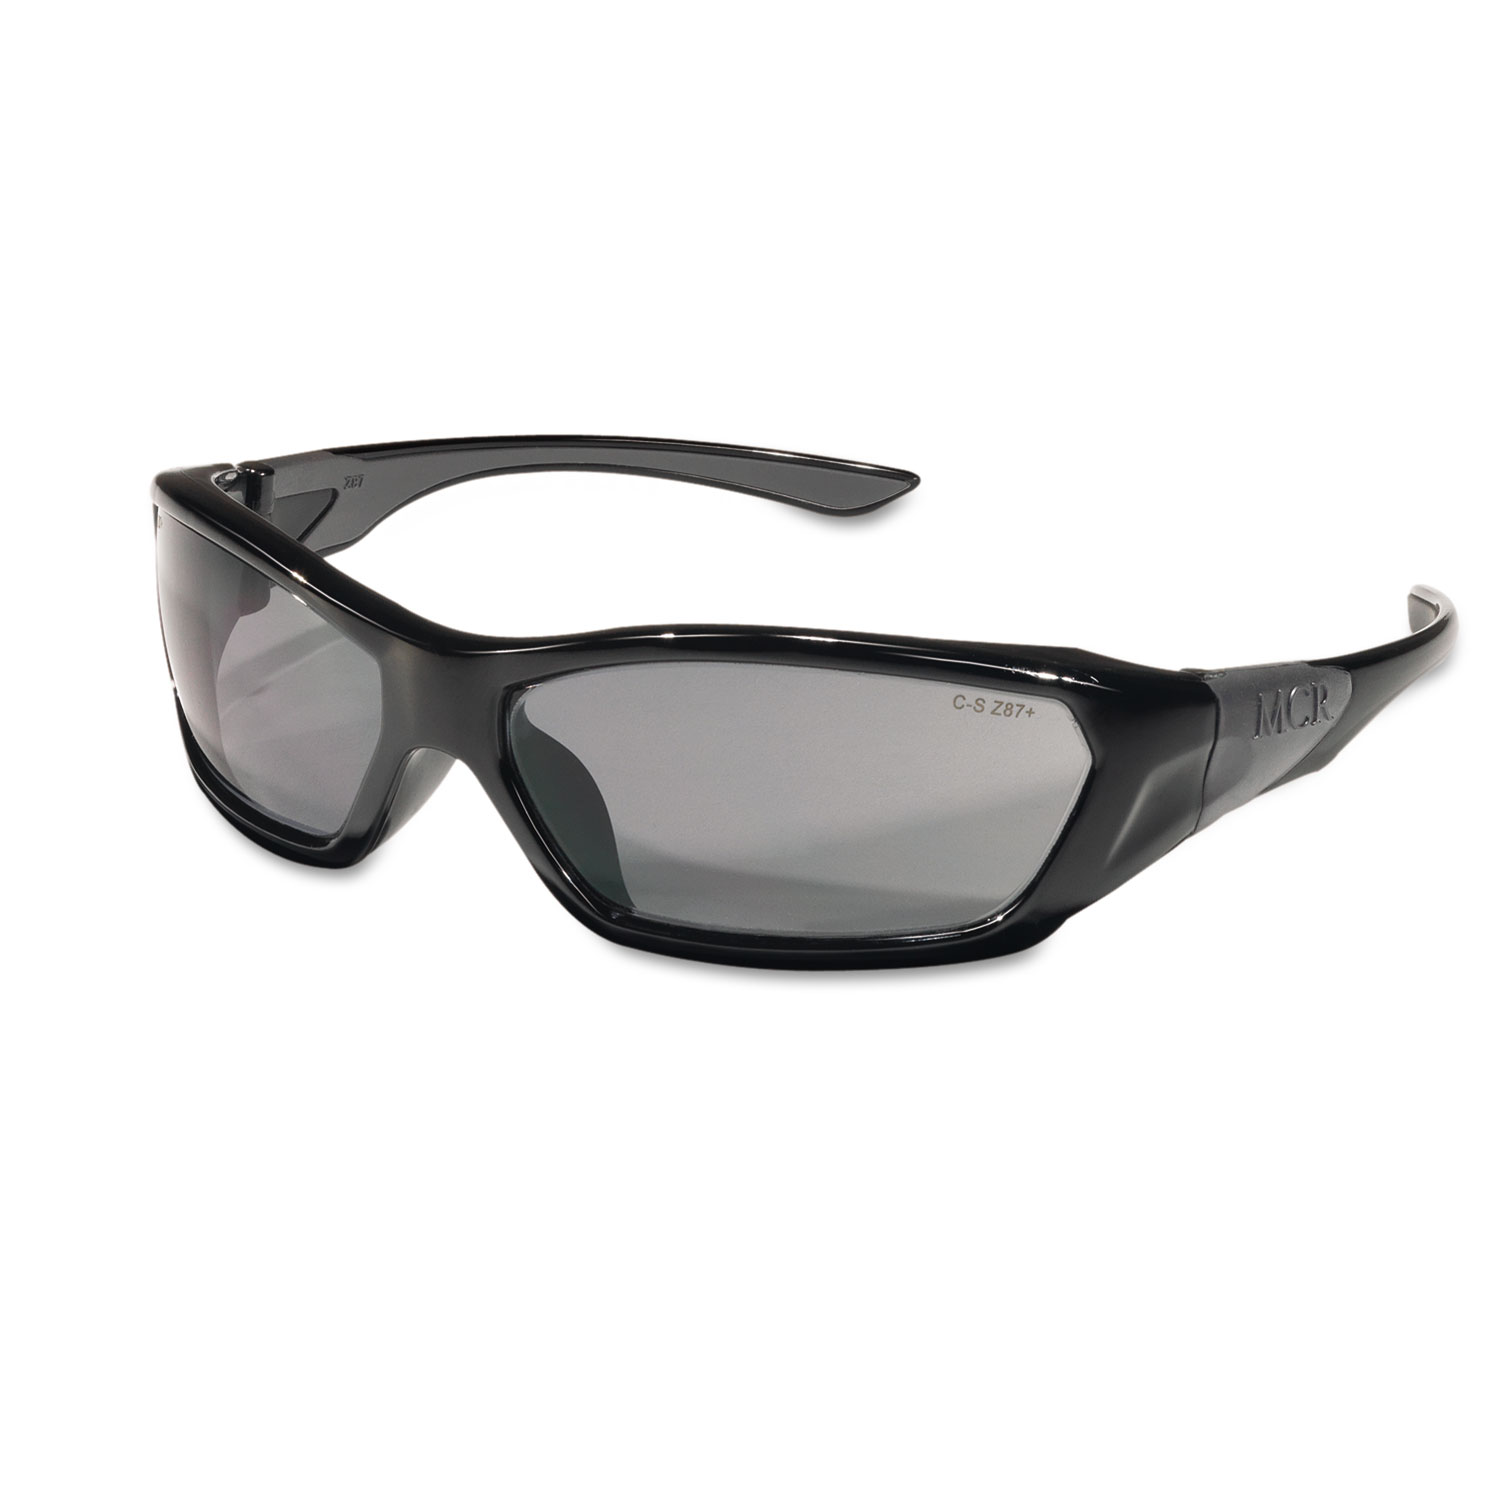  MCR Safety FF122 ForceFlex Safety Glasses, Black Frame, Gray Lens (CRWFF122) 